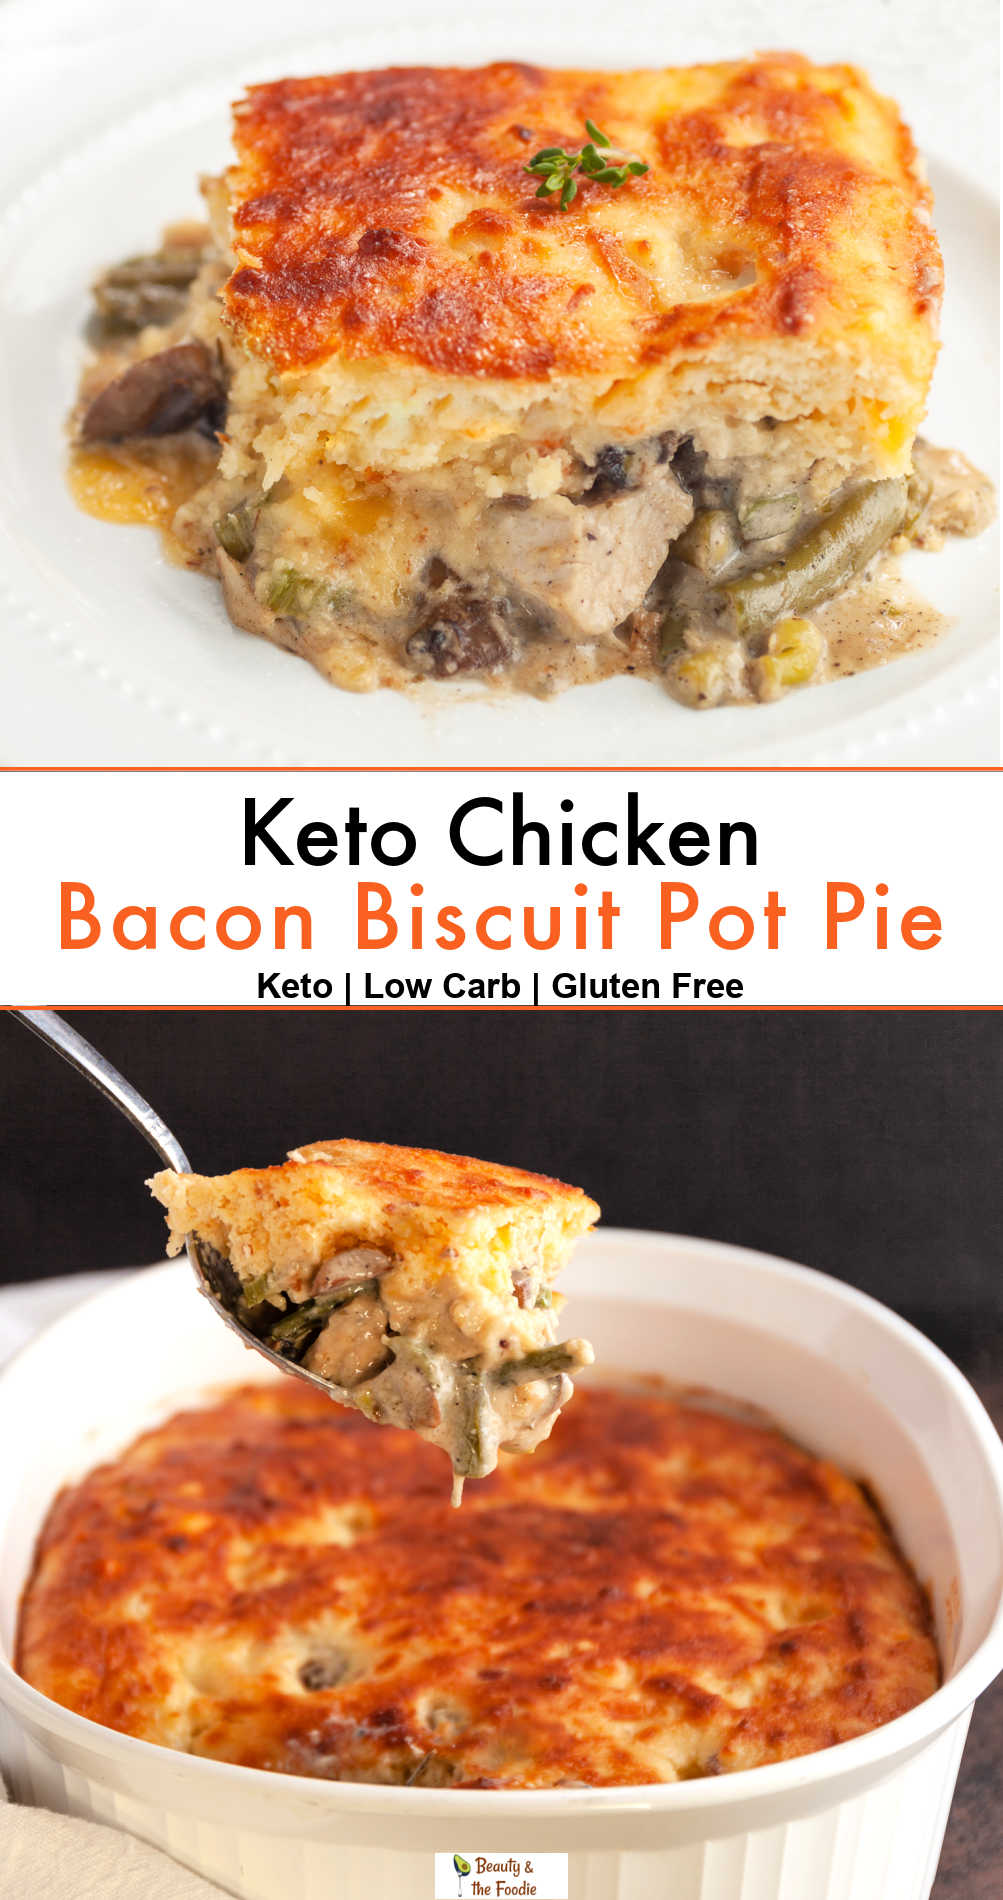 A keto pot pie with chicken, veggies & a biscuit crust.